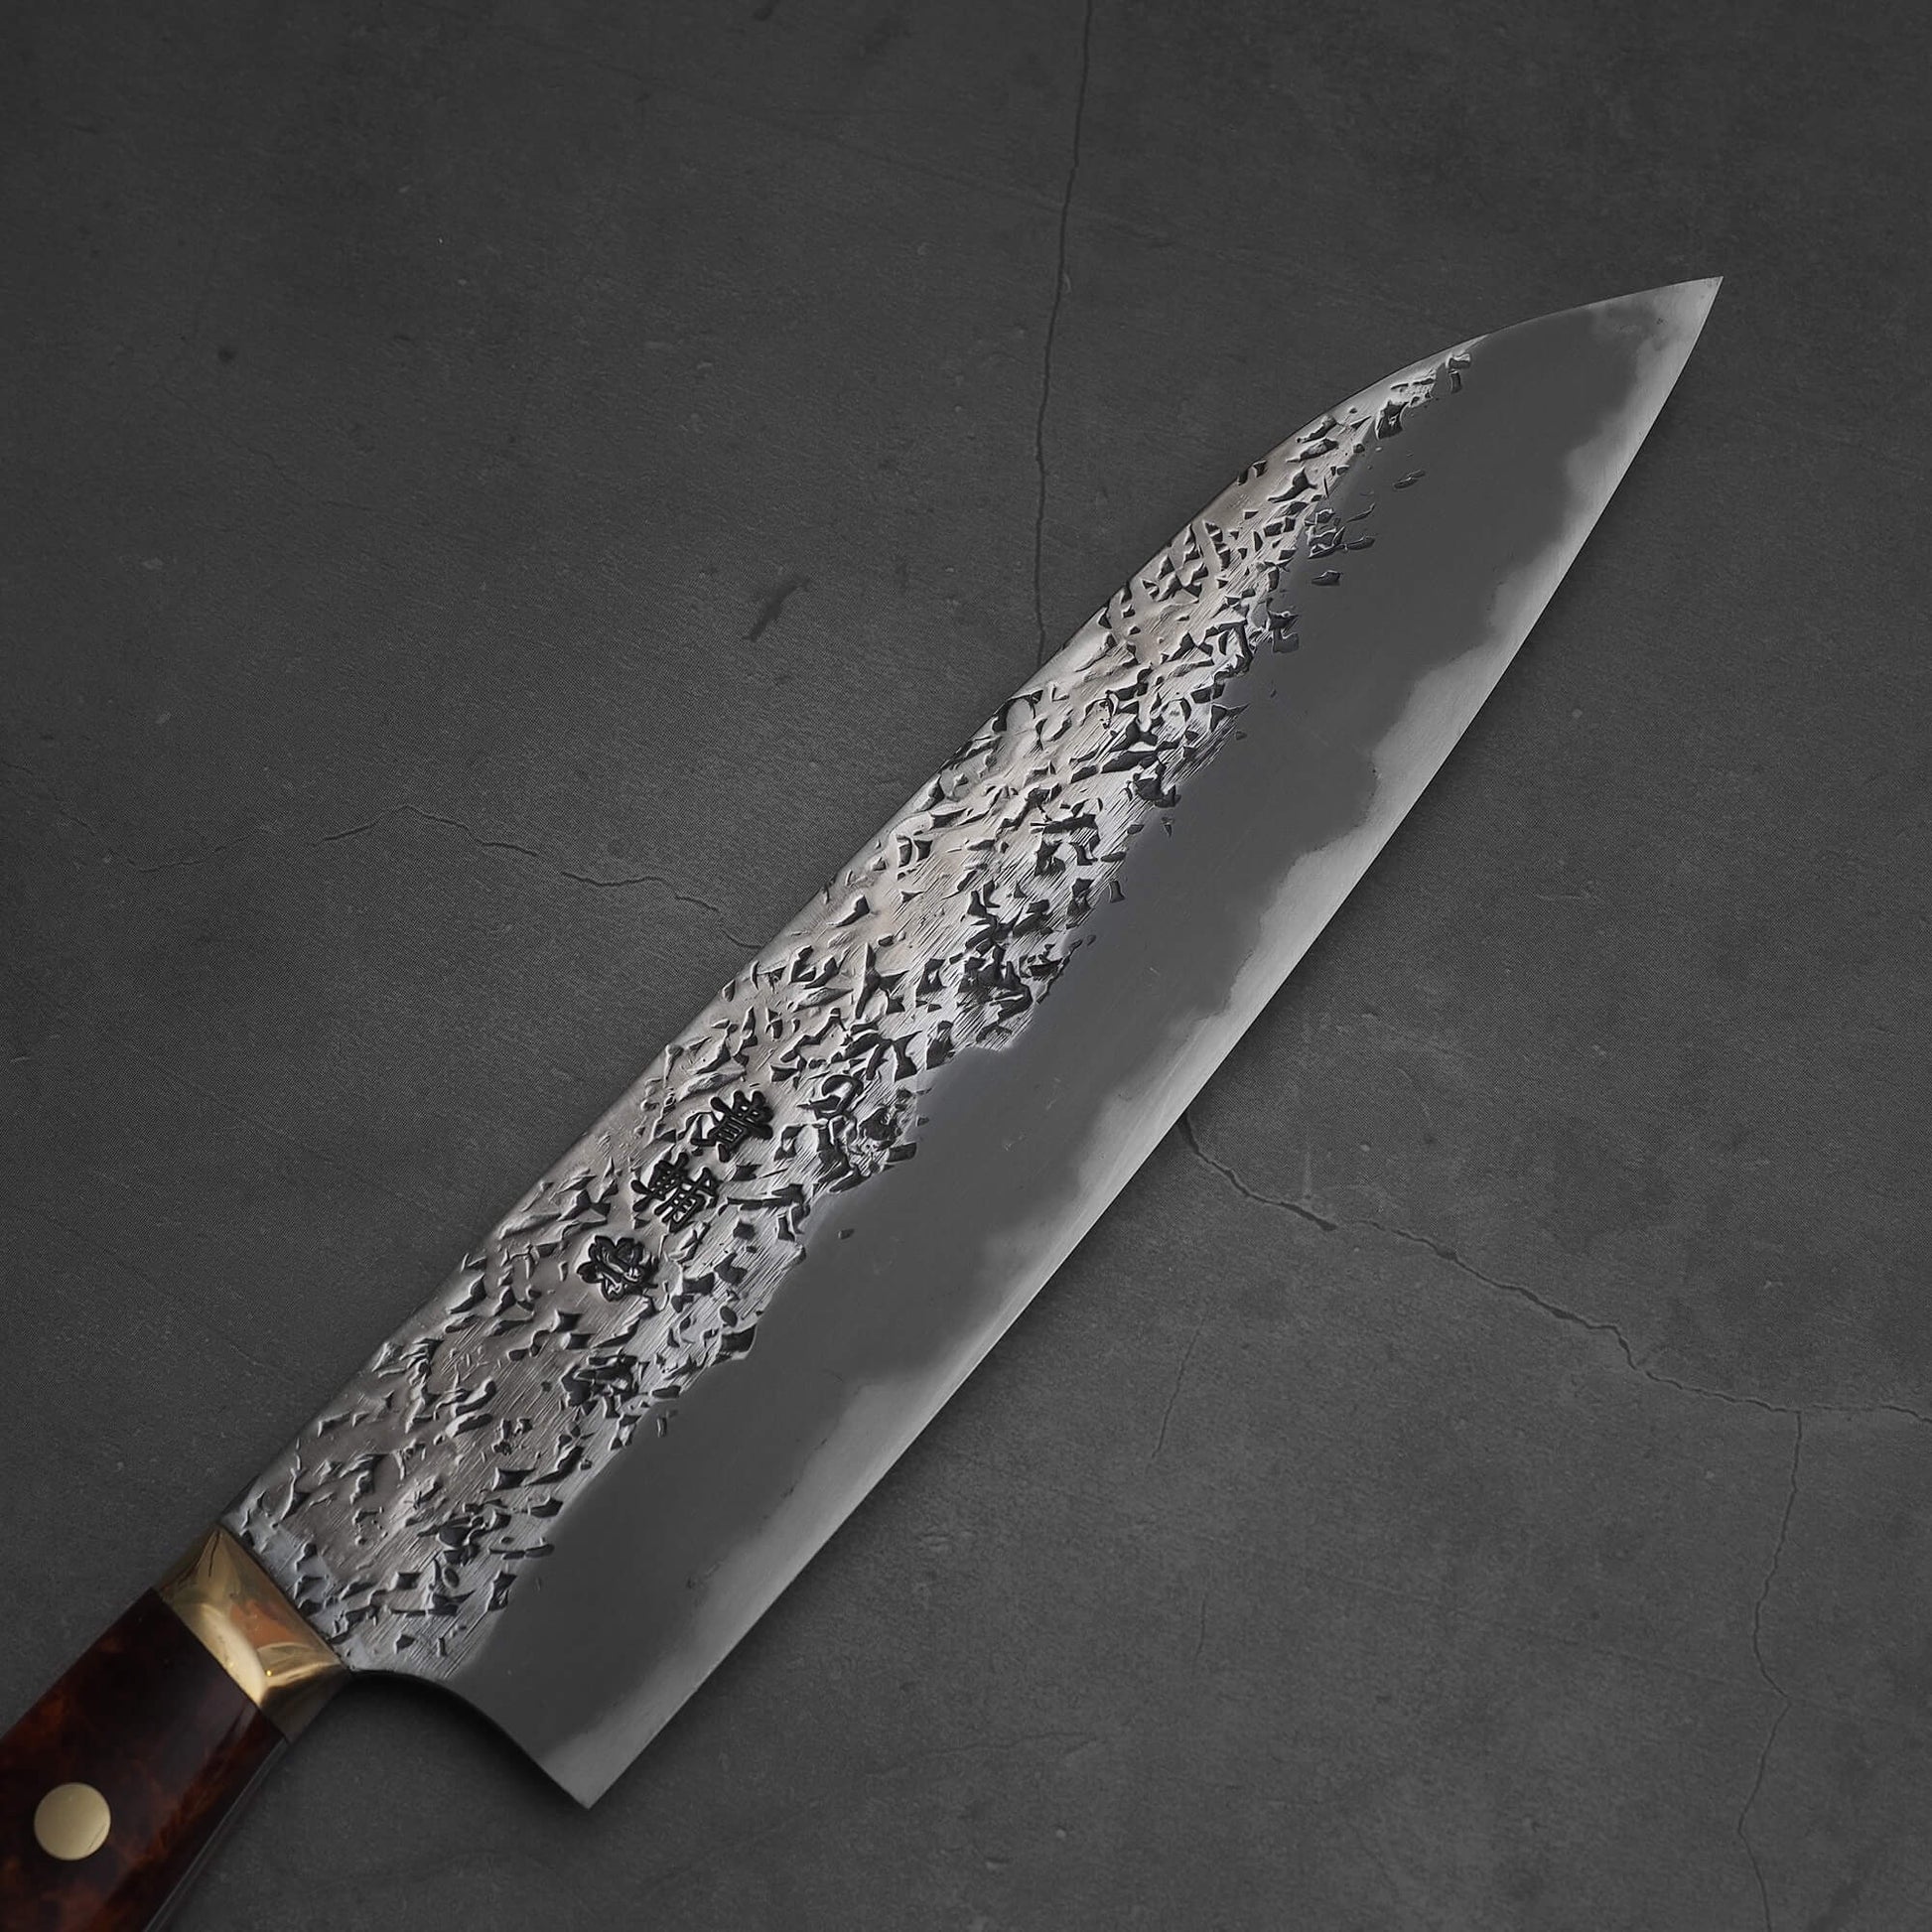 Top view of 220mm Kisuke Manaka tsuchime honwarikomi shirogami#2 gyuto knife. Image shows the right side of the blade